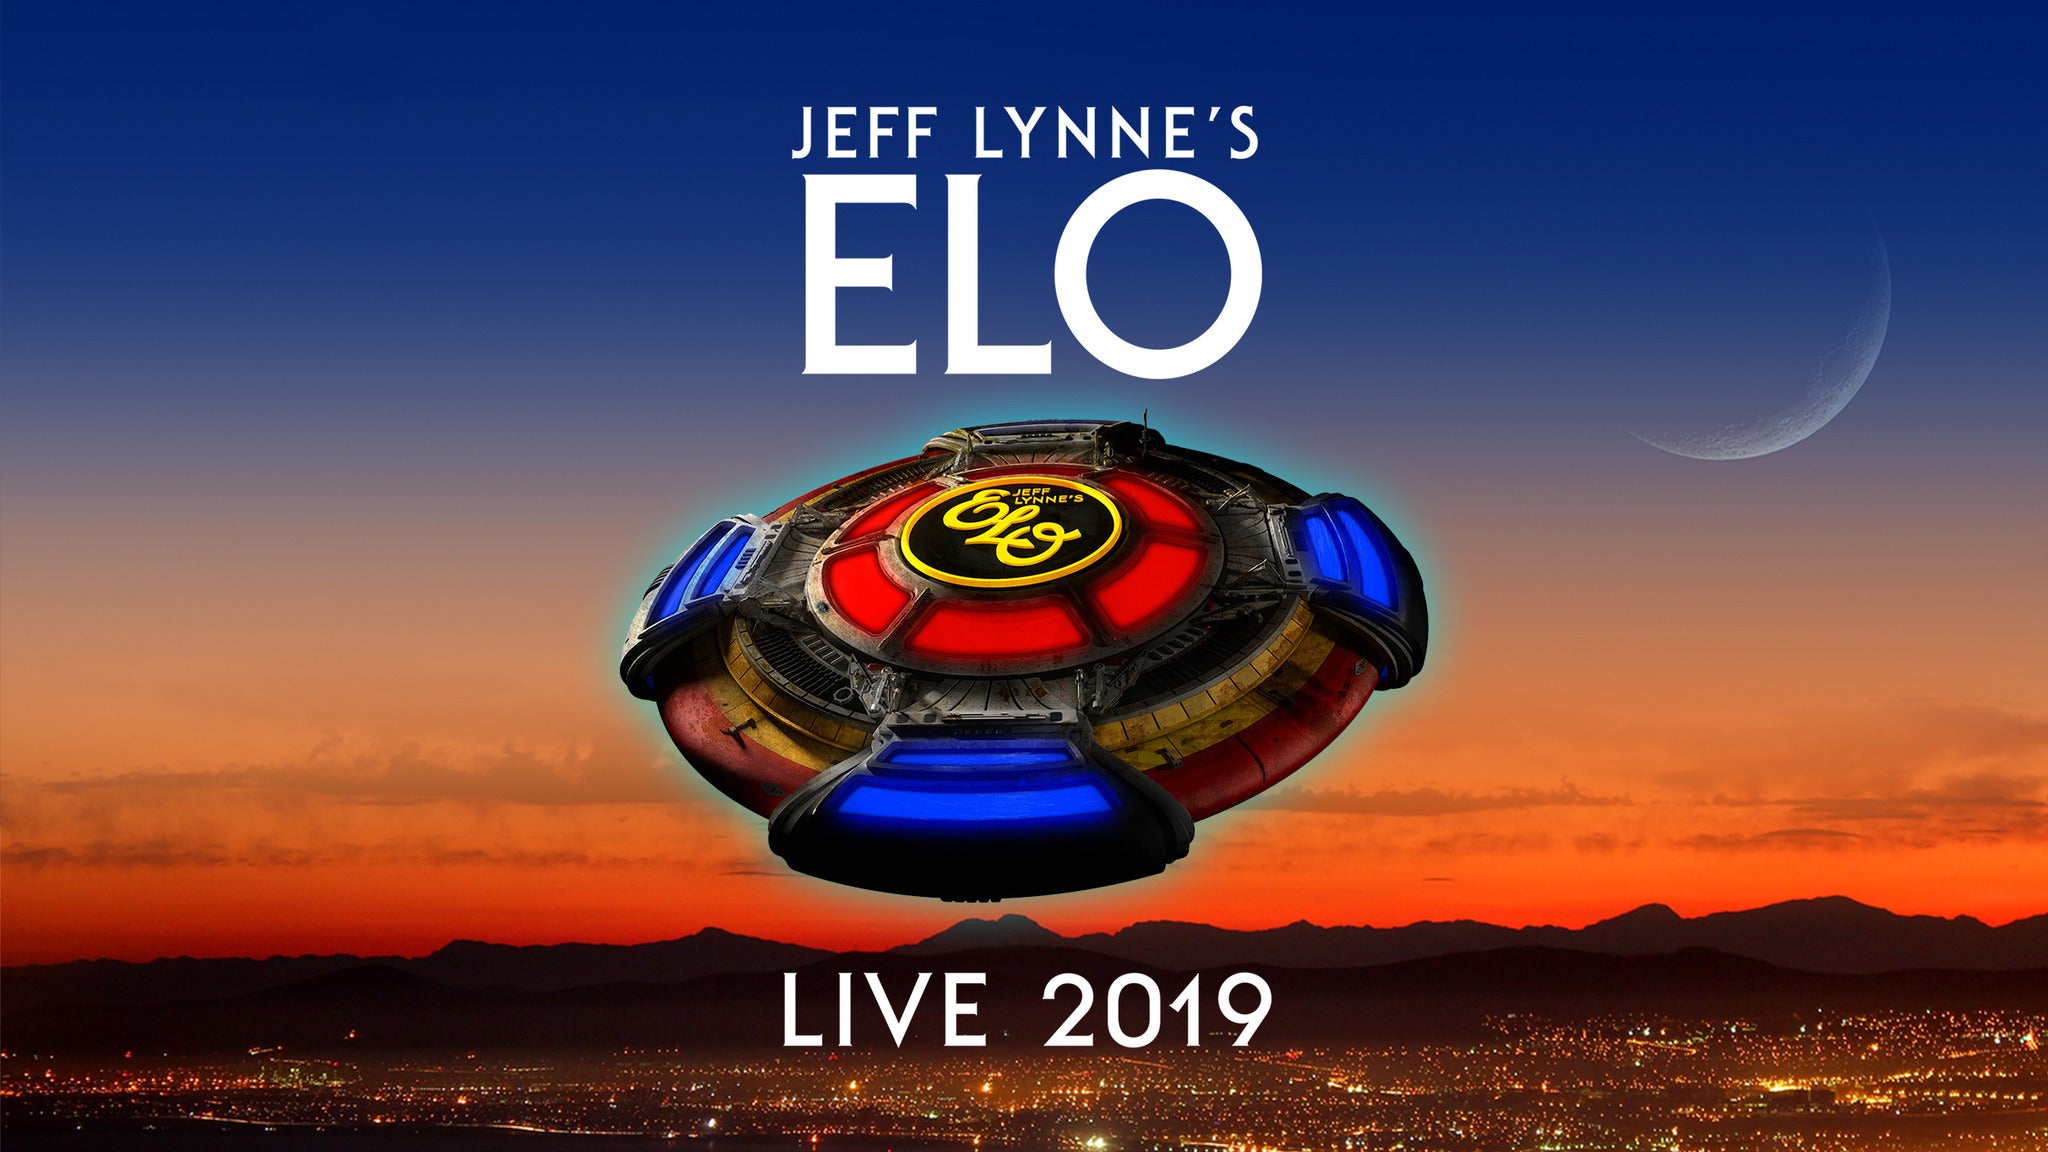 Jeff Lynne's ELO with special guest Dhani Harrison in Portland promo photo for Fan Club presale offer code